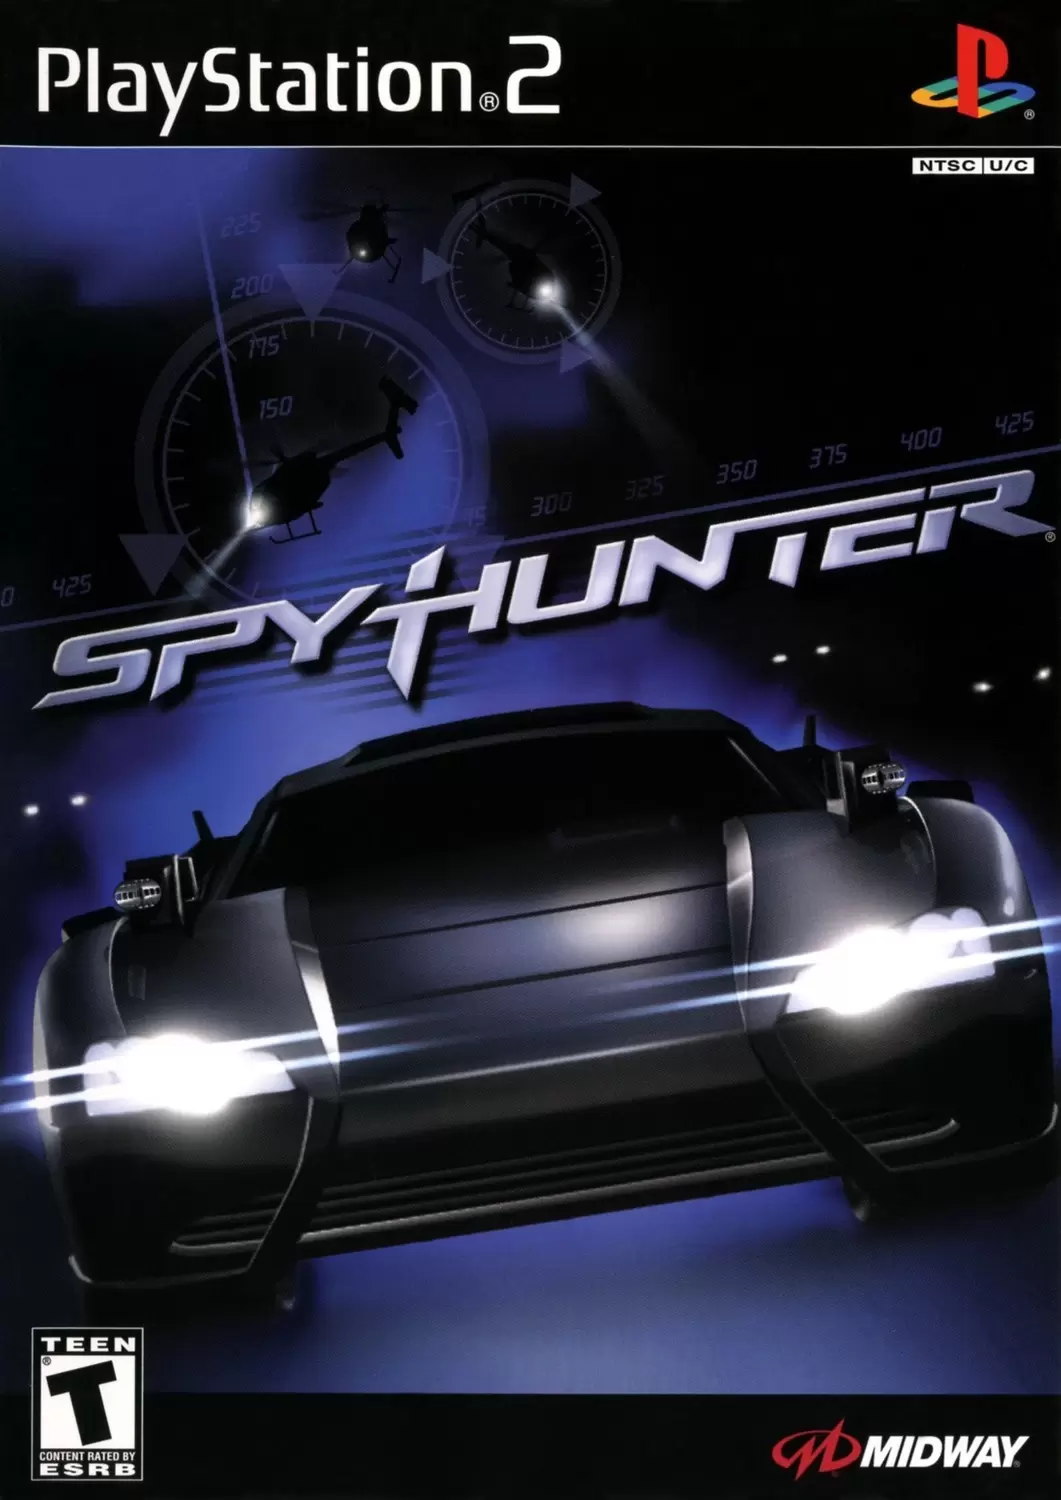 PS2 Games - Spy Hunter